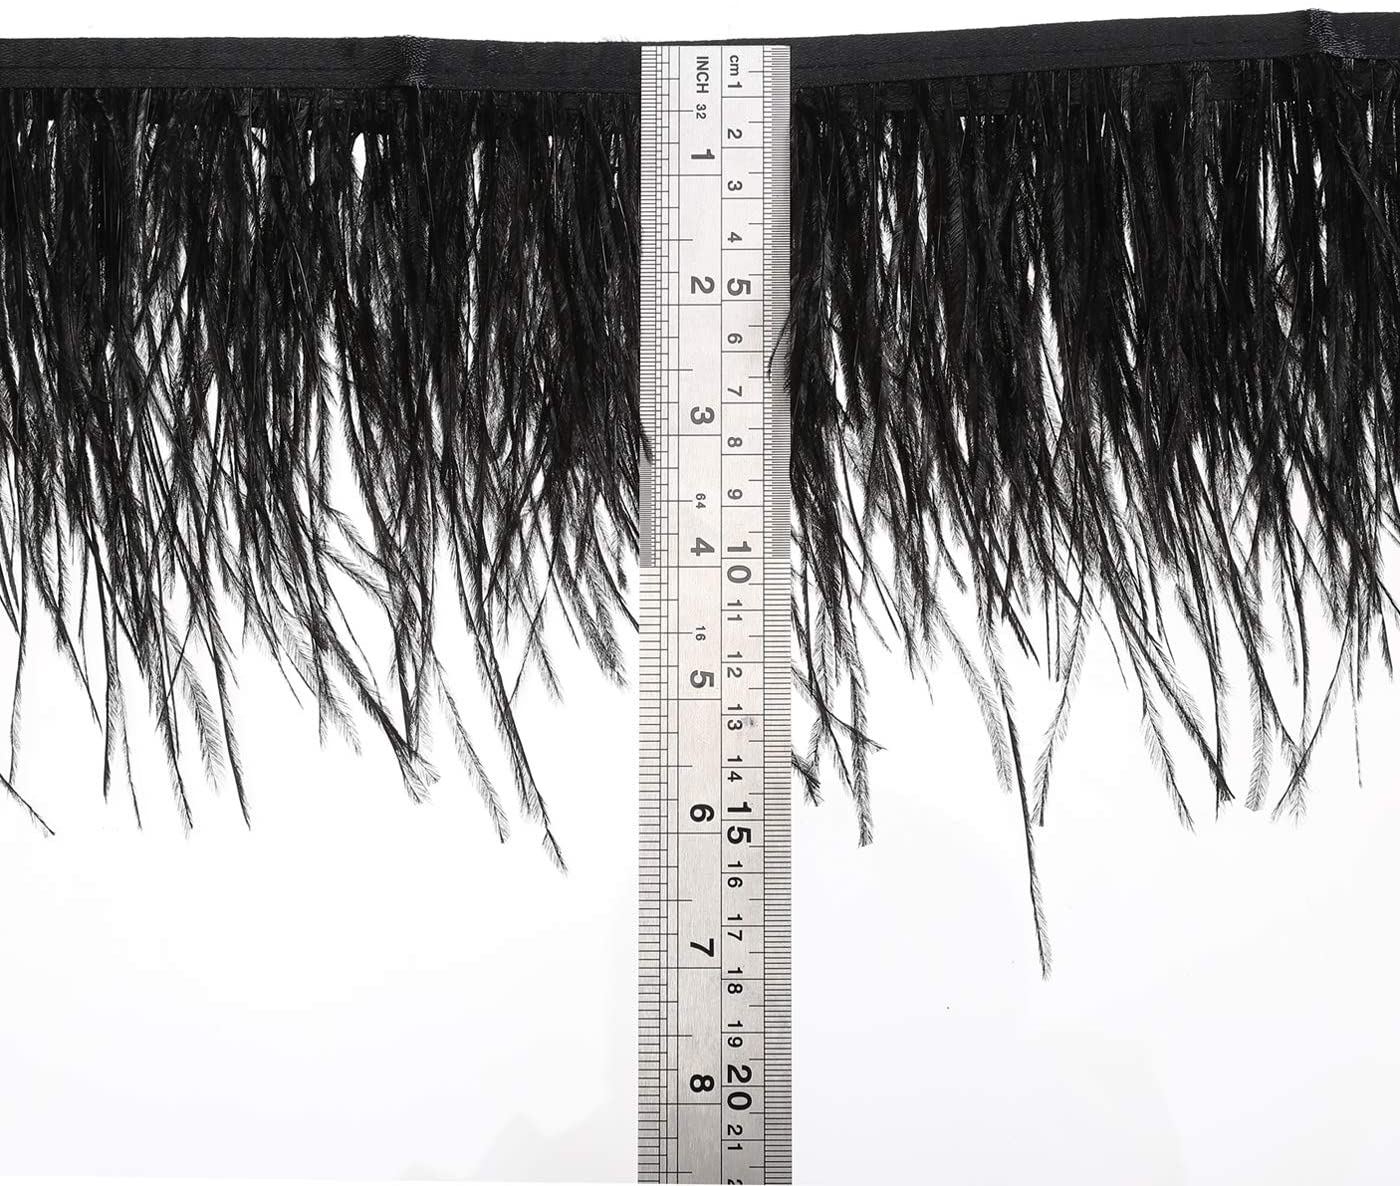 AWAYTR Ostrich Feather Trim Fringe - Satin Ribbon Dress Sewing Crafts  Costumes Decoration Pack of 2 Yards (Black) Black 2 Yards 